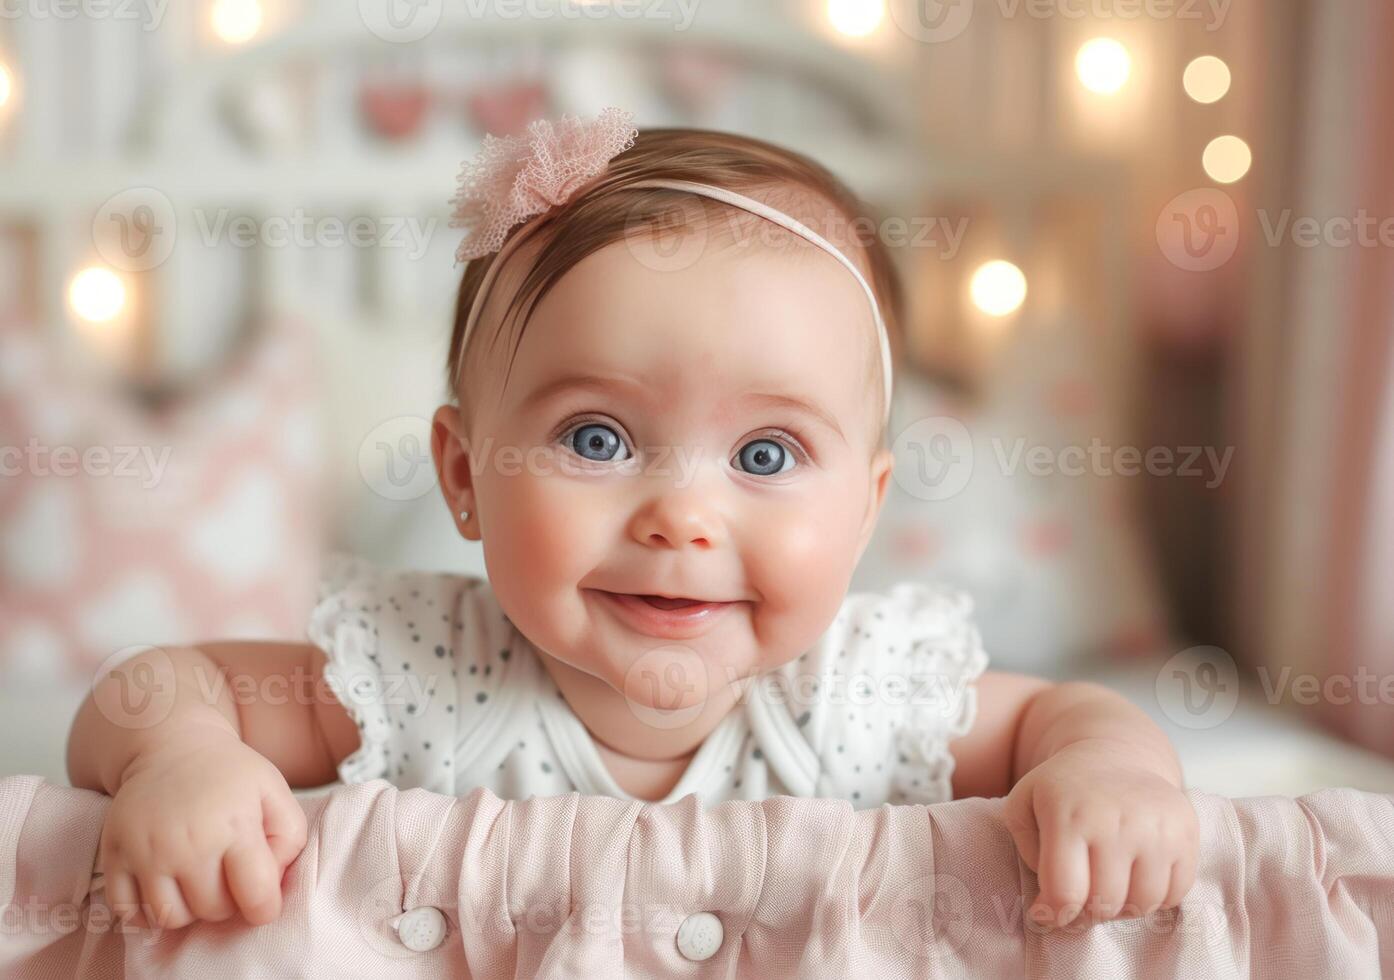 AI generated Smiling Blue-Eyed Baby Enjoying Tummy Time Indoors on a Textured Blanket photo